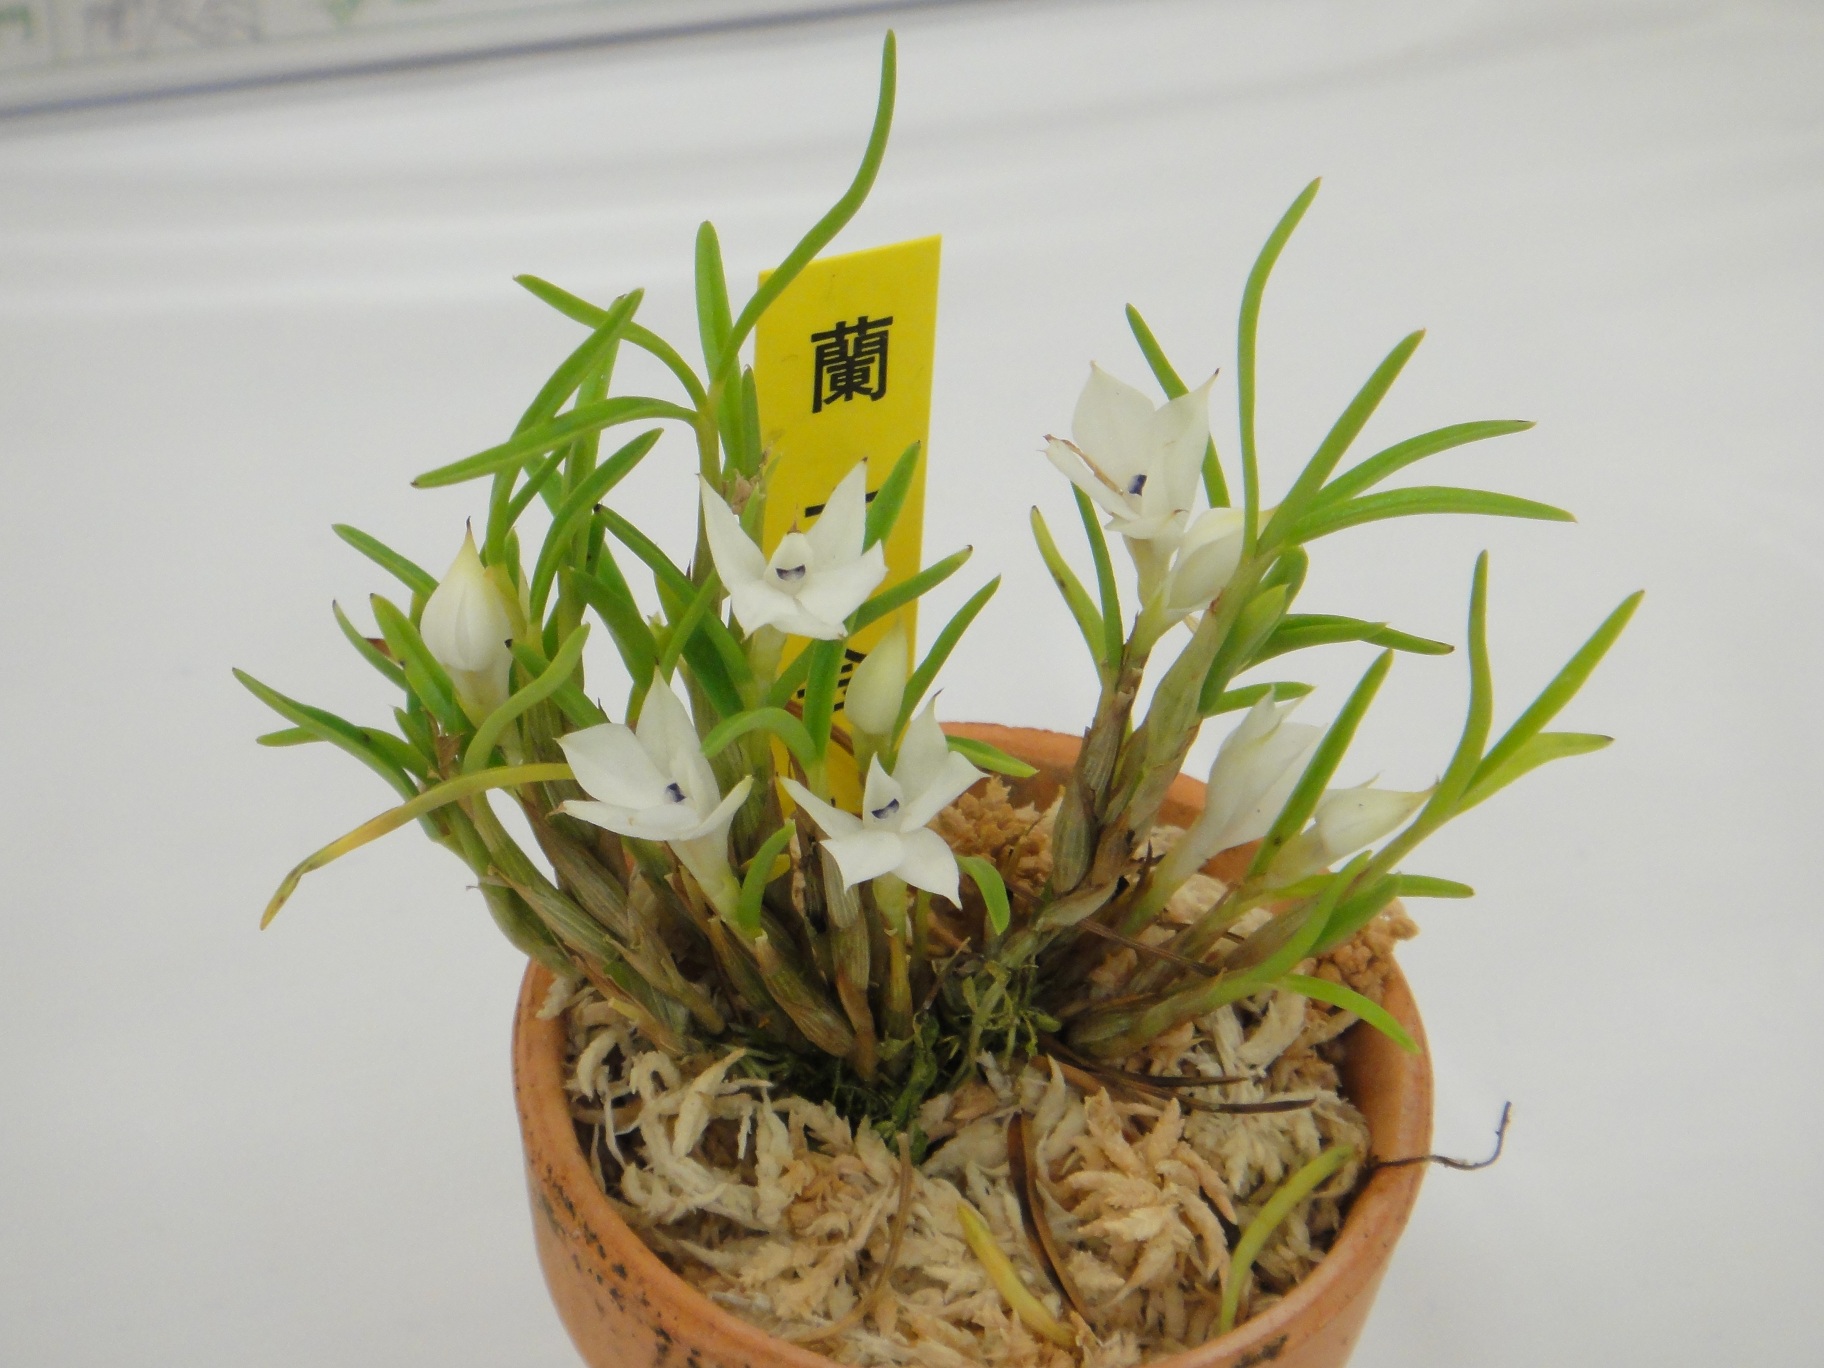 http://orchids.la.coocan.jp/Dendrobium/Dendrobium%20subuliferum/DSC08738.JPG